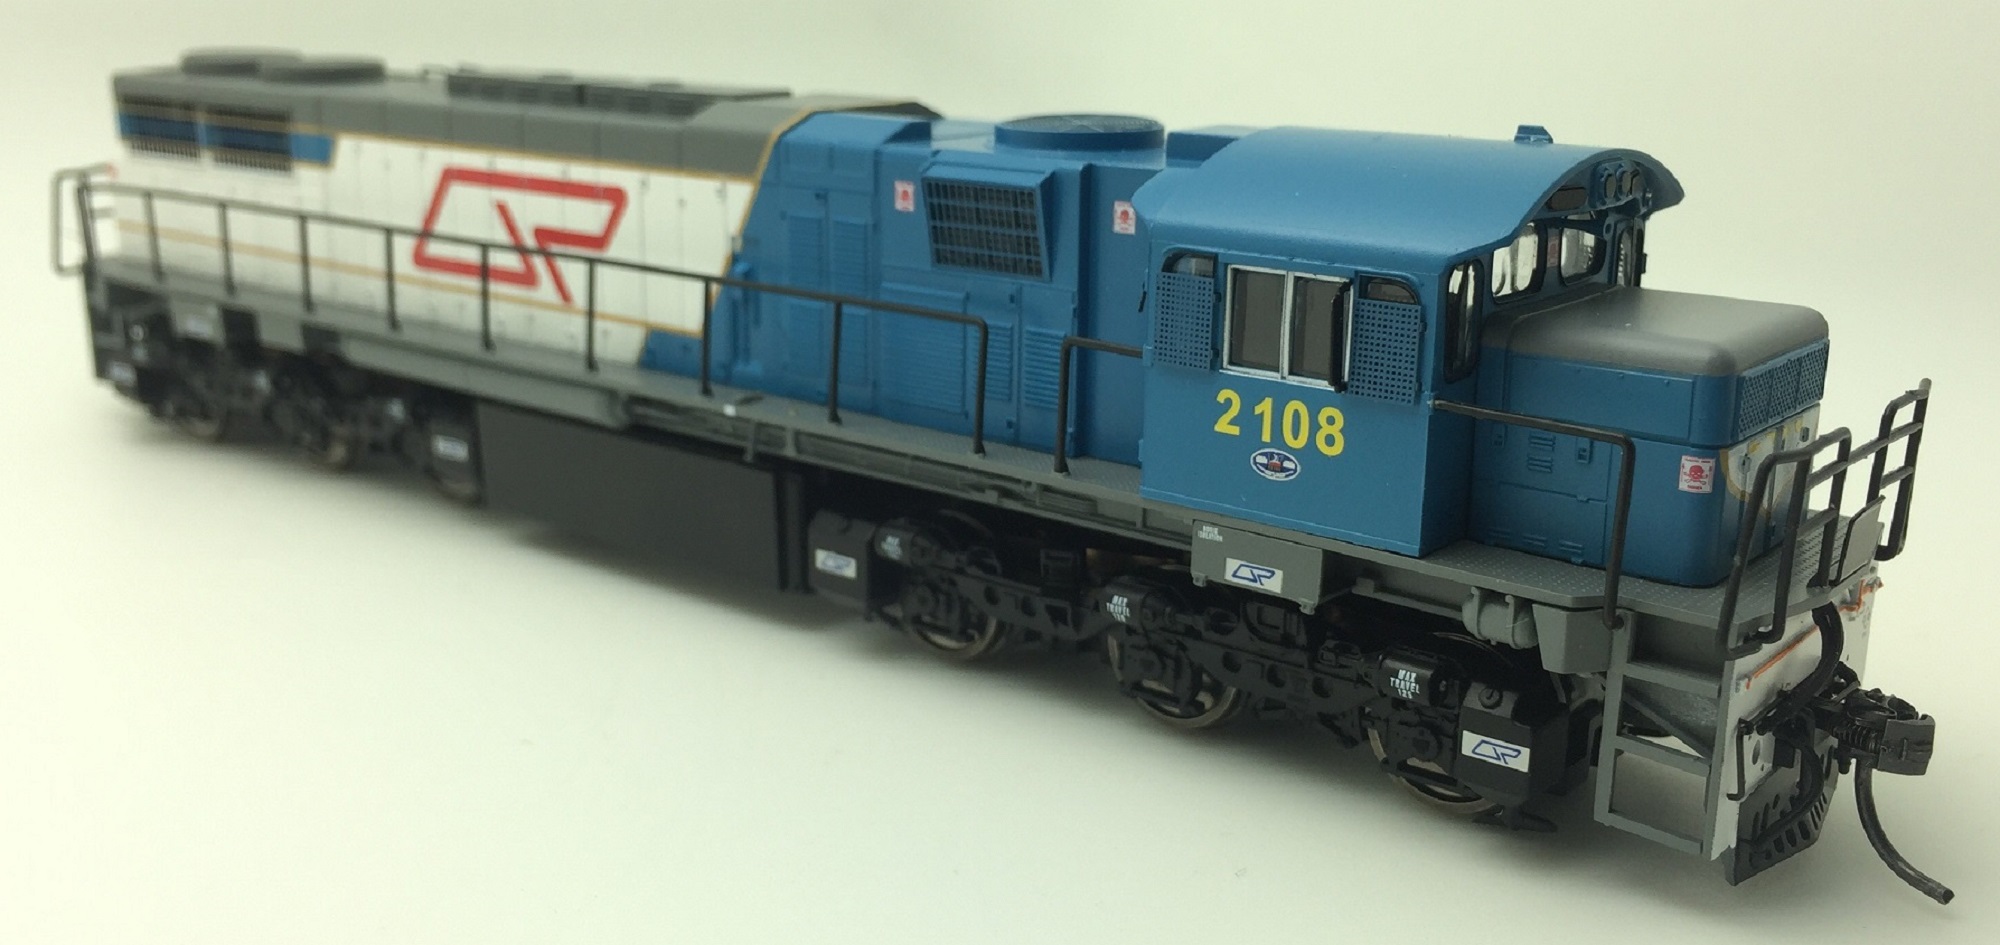 RTR061 2100 Class Locomotive #2108 HOn3½